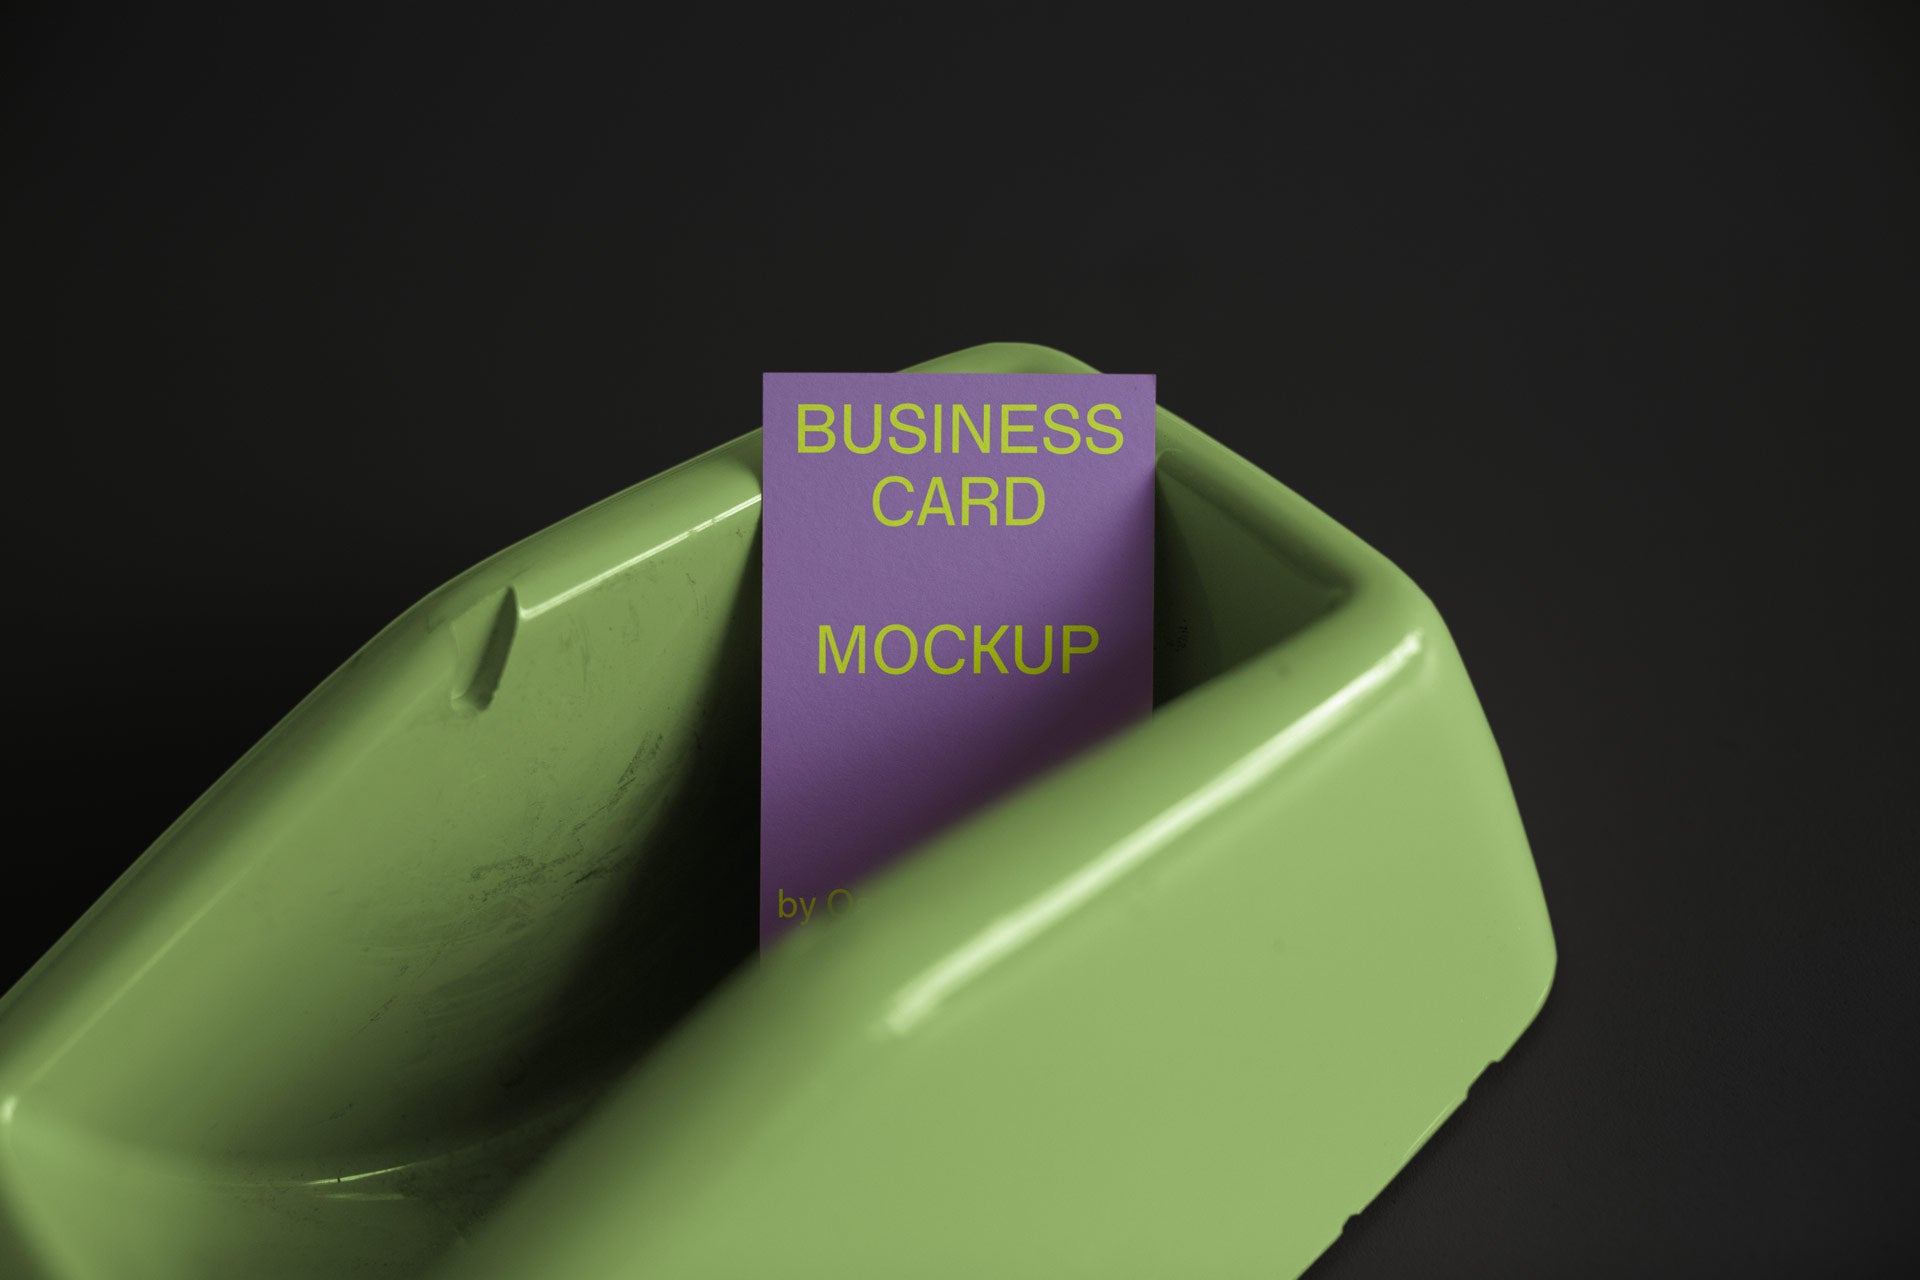 BC3 Business Card Mockup in Tape Dispenser